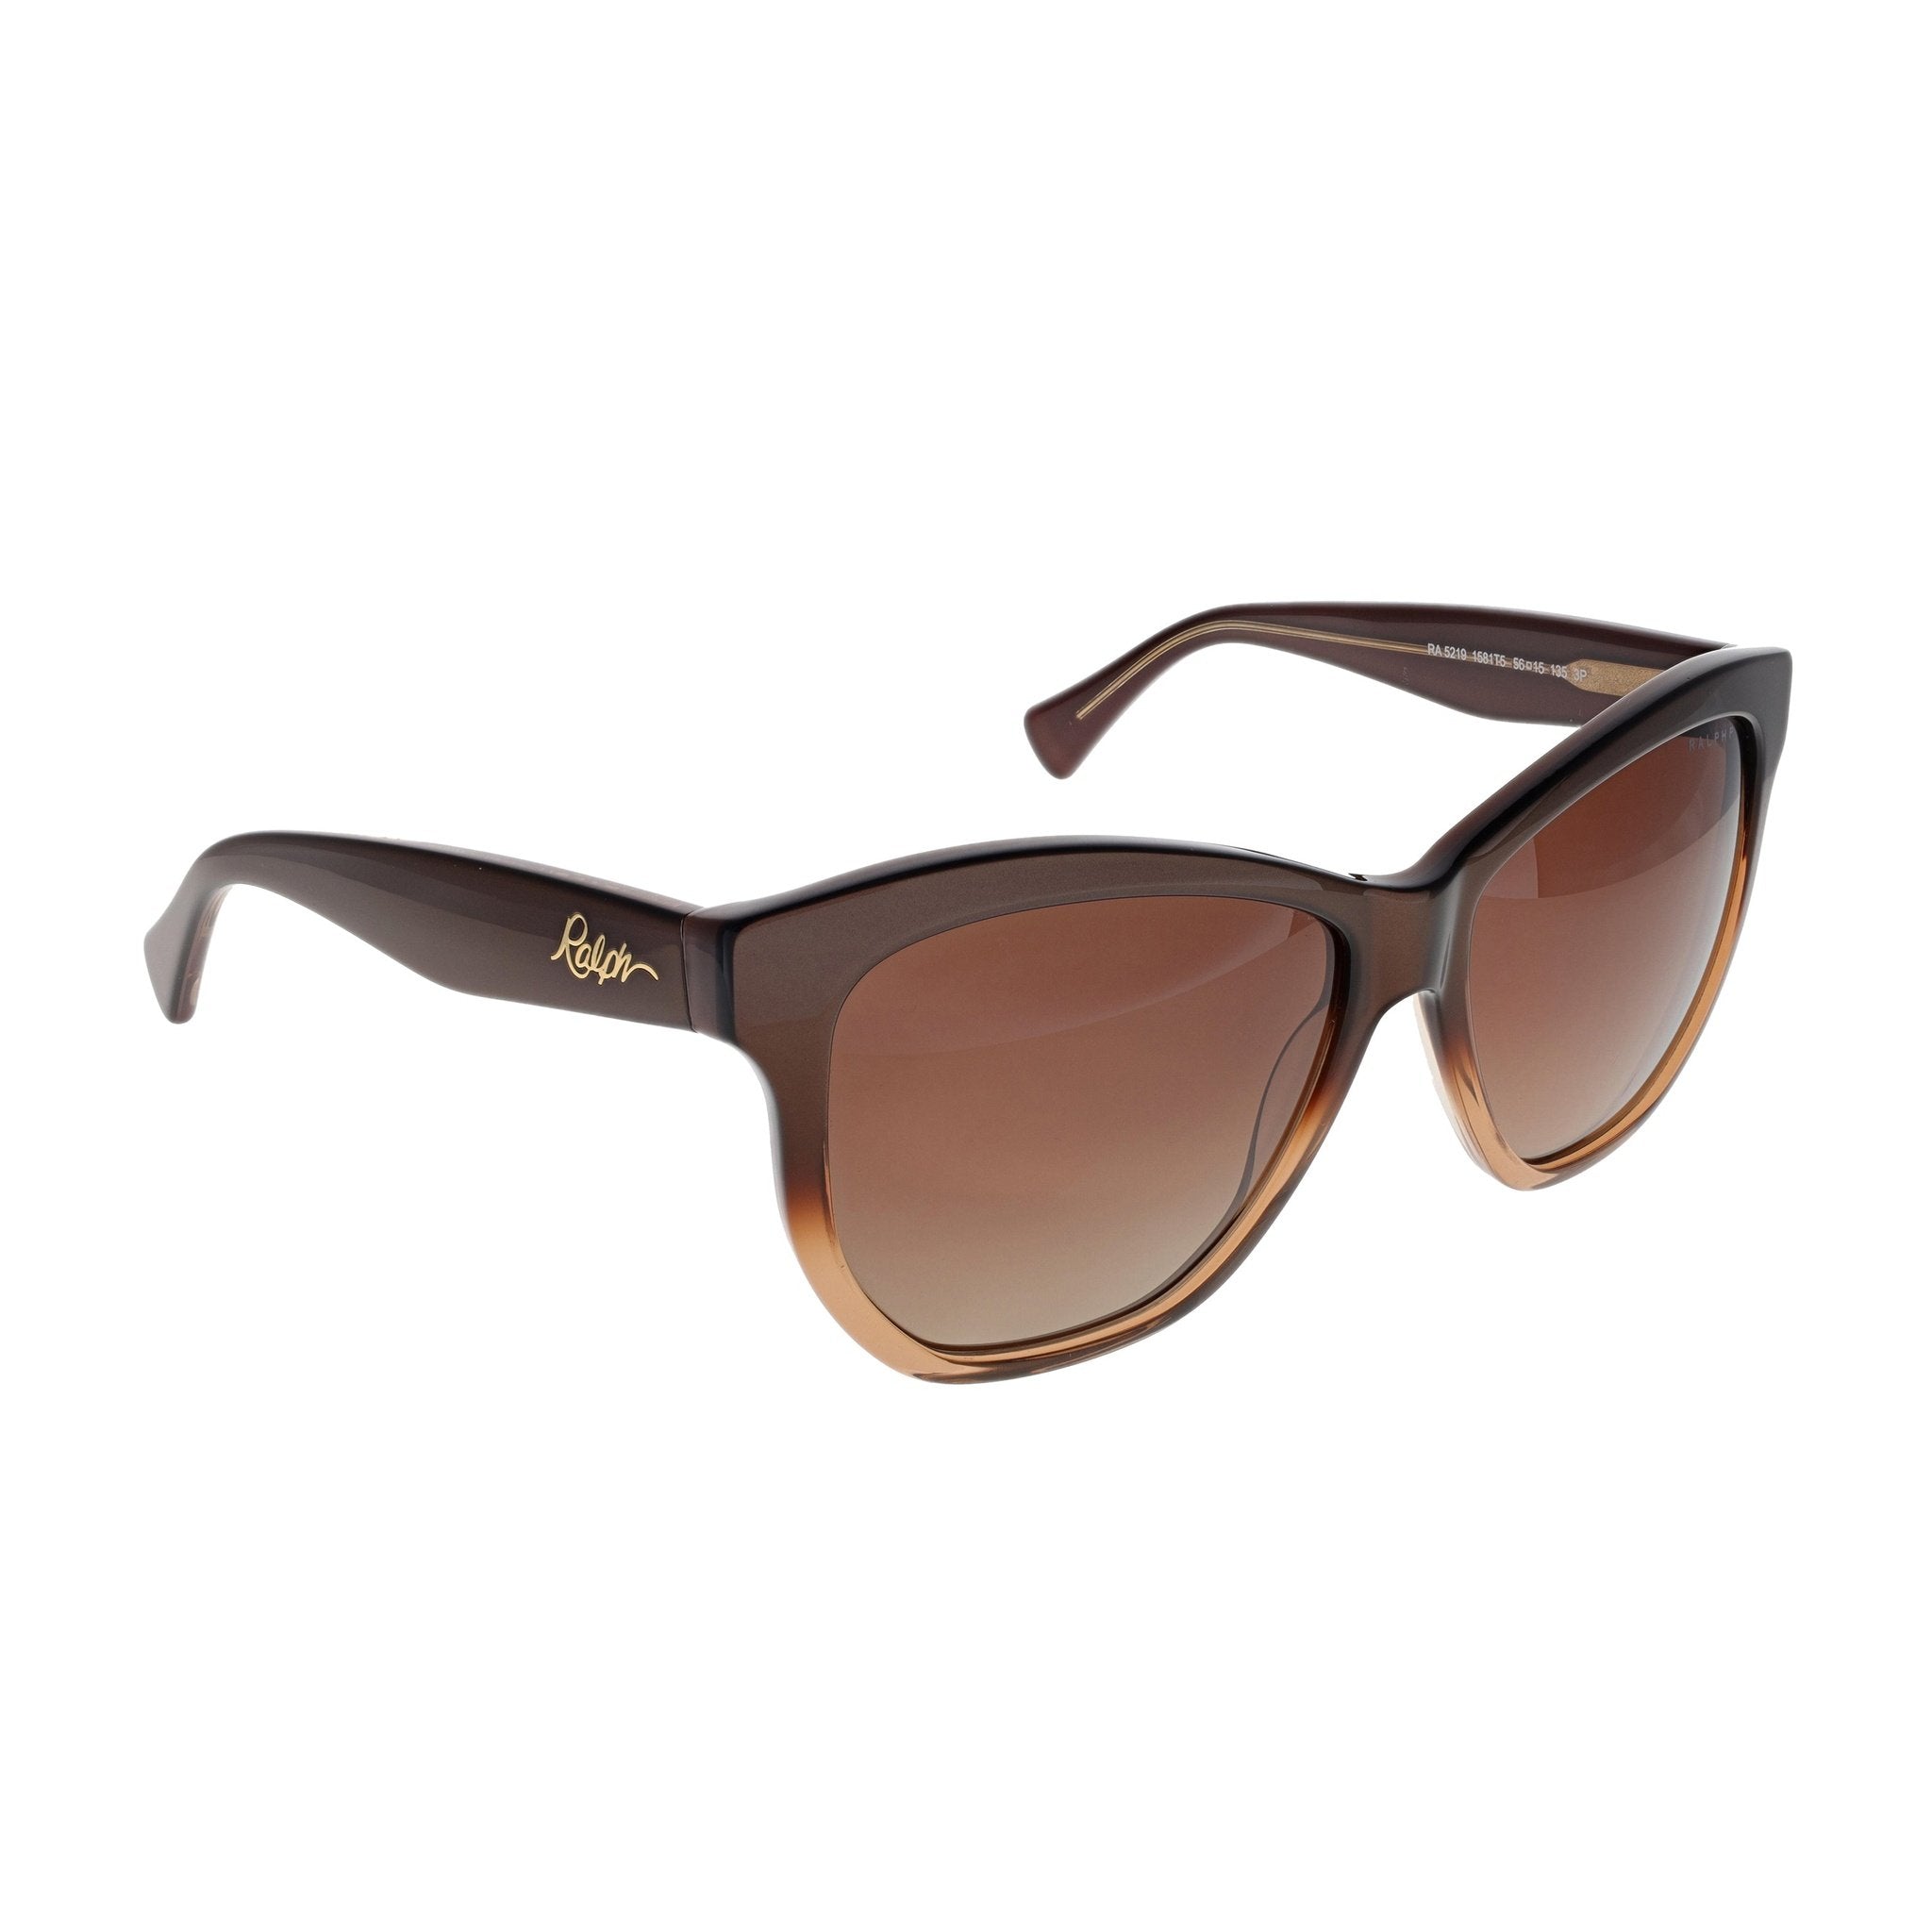 Ralph Lauren Sunglasses - RA5219-1581T5